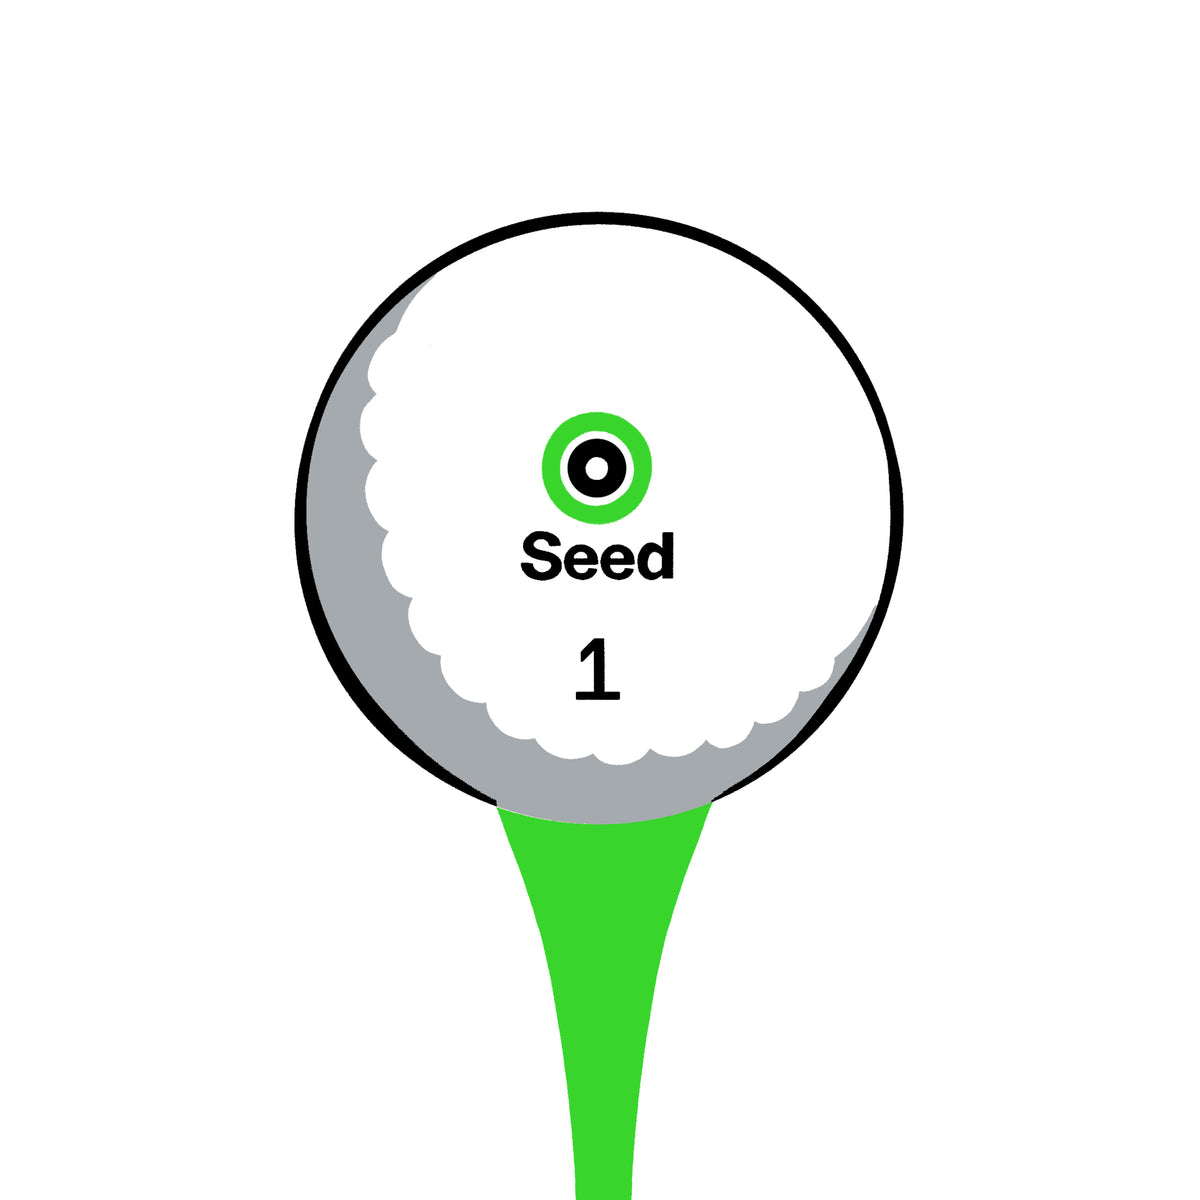 Seed Golf